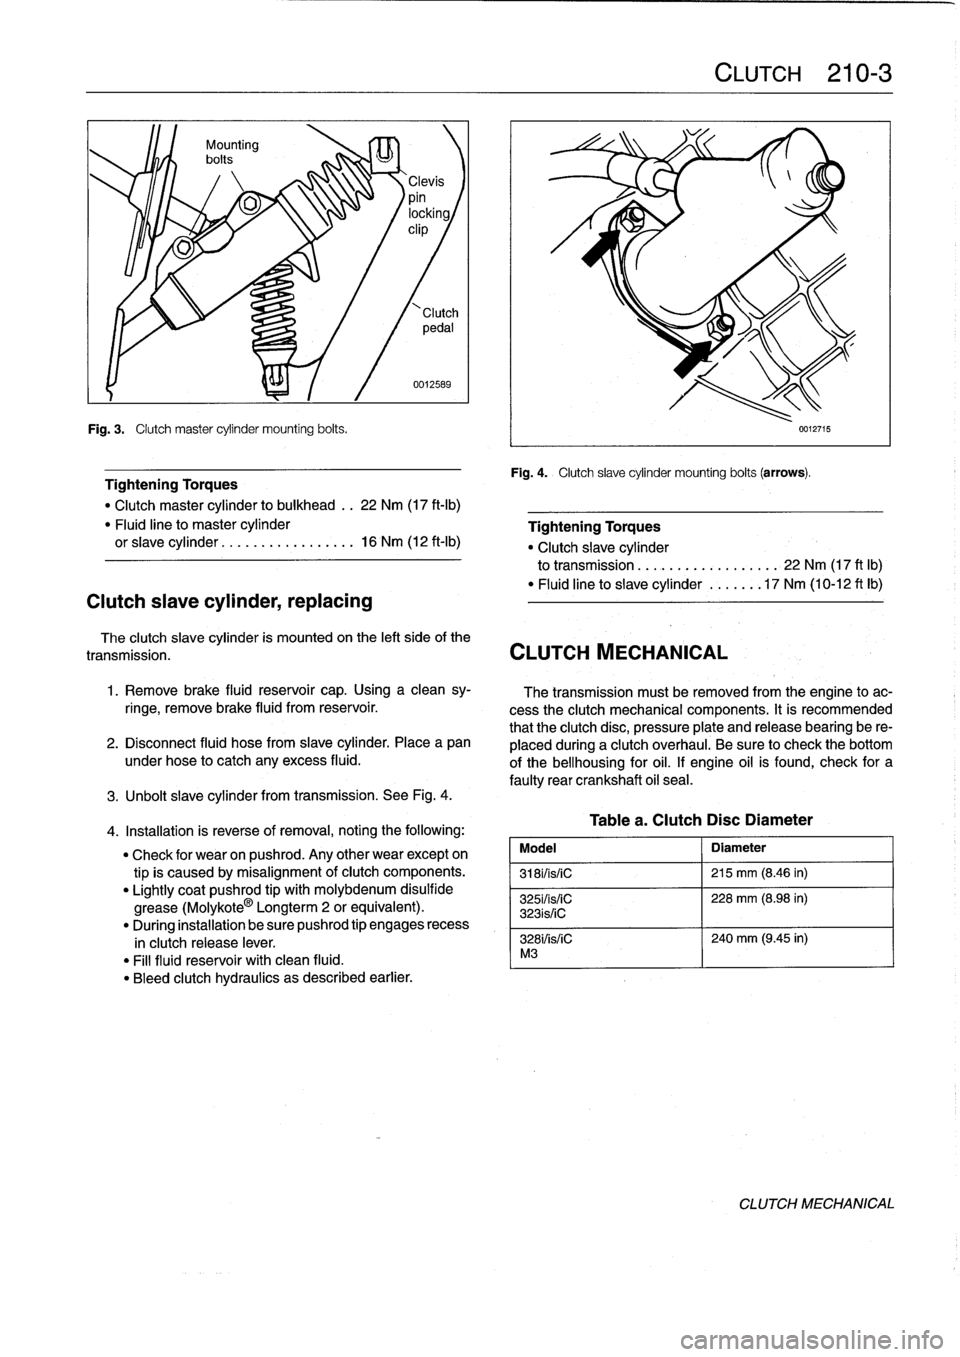 BMW 318i 1997 E36 Workshop Manual Fig
.
3
.

	

Clutch
master
cylinder
mounting
bolts
.

Clutch
slave
cylinder,
replacing

0012589

Tightening
Torques

"
Clutch
master
cylinder
to
bulkhead
..
22
Nm
(17
ft-Ib)
"
Fluid
line
to
master
cy